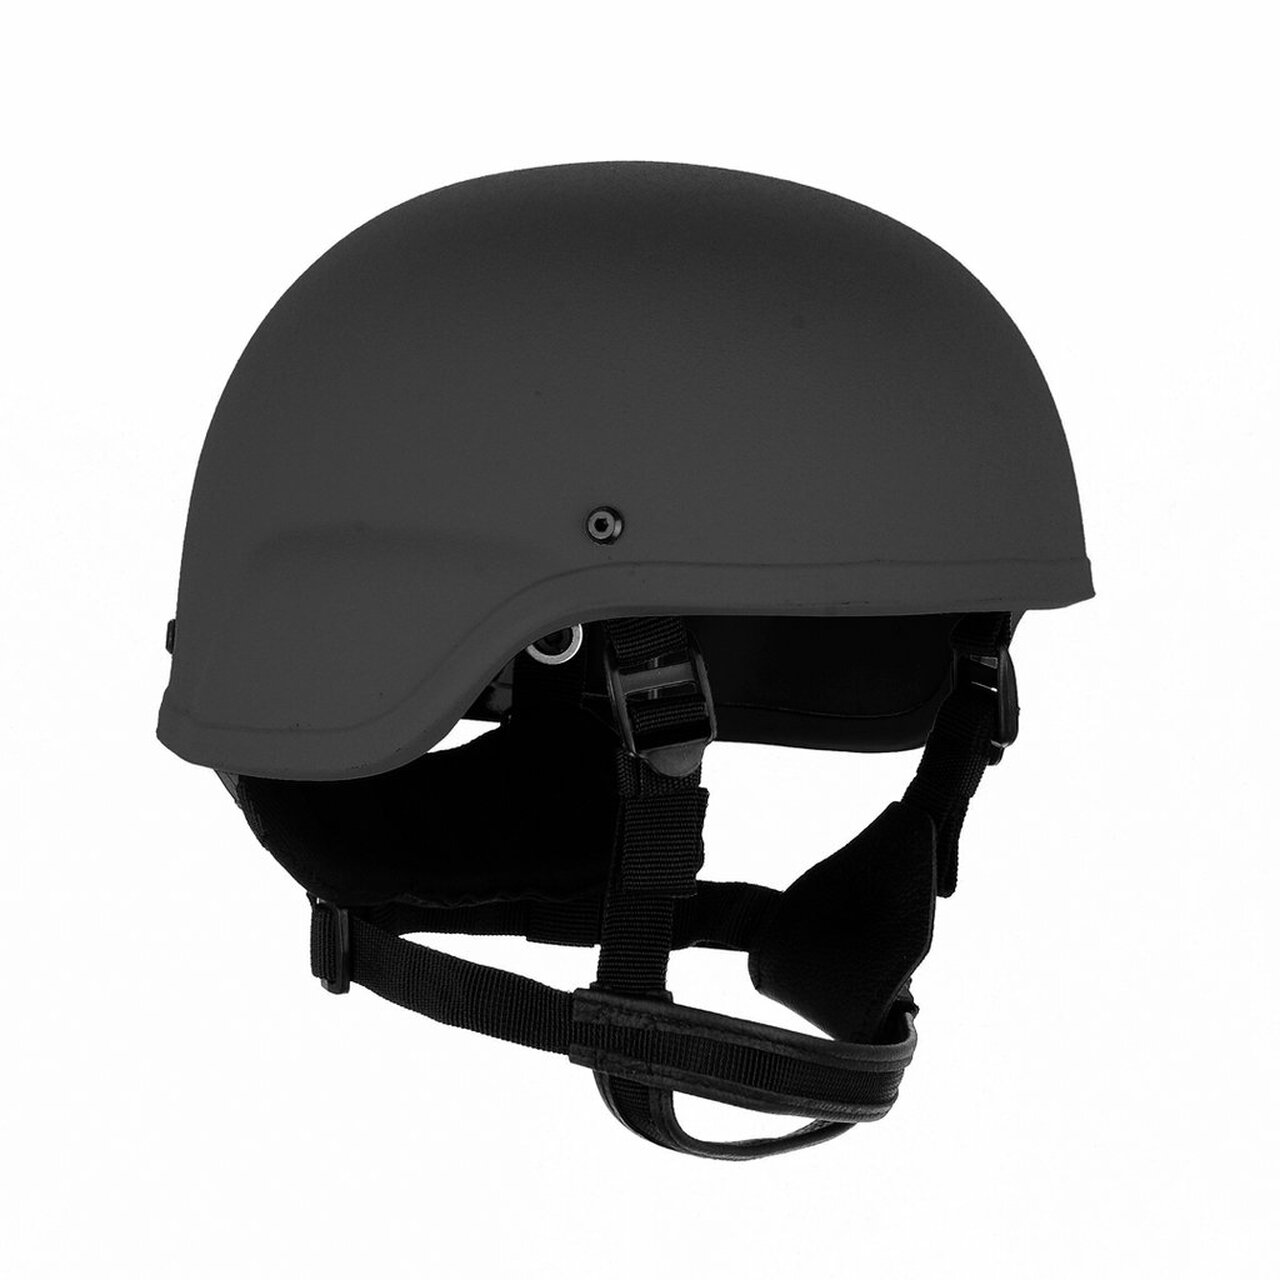 A Shellback Tactical Level IIIA ACH Standard Cut Ballistic Helmet on a white background.